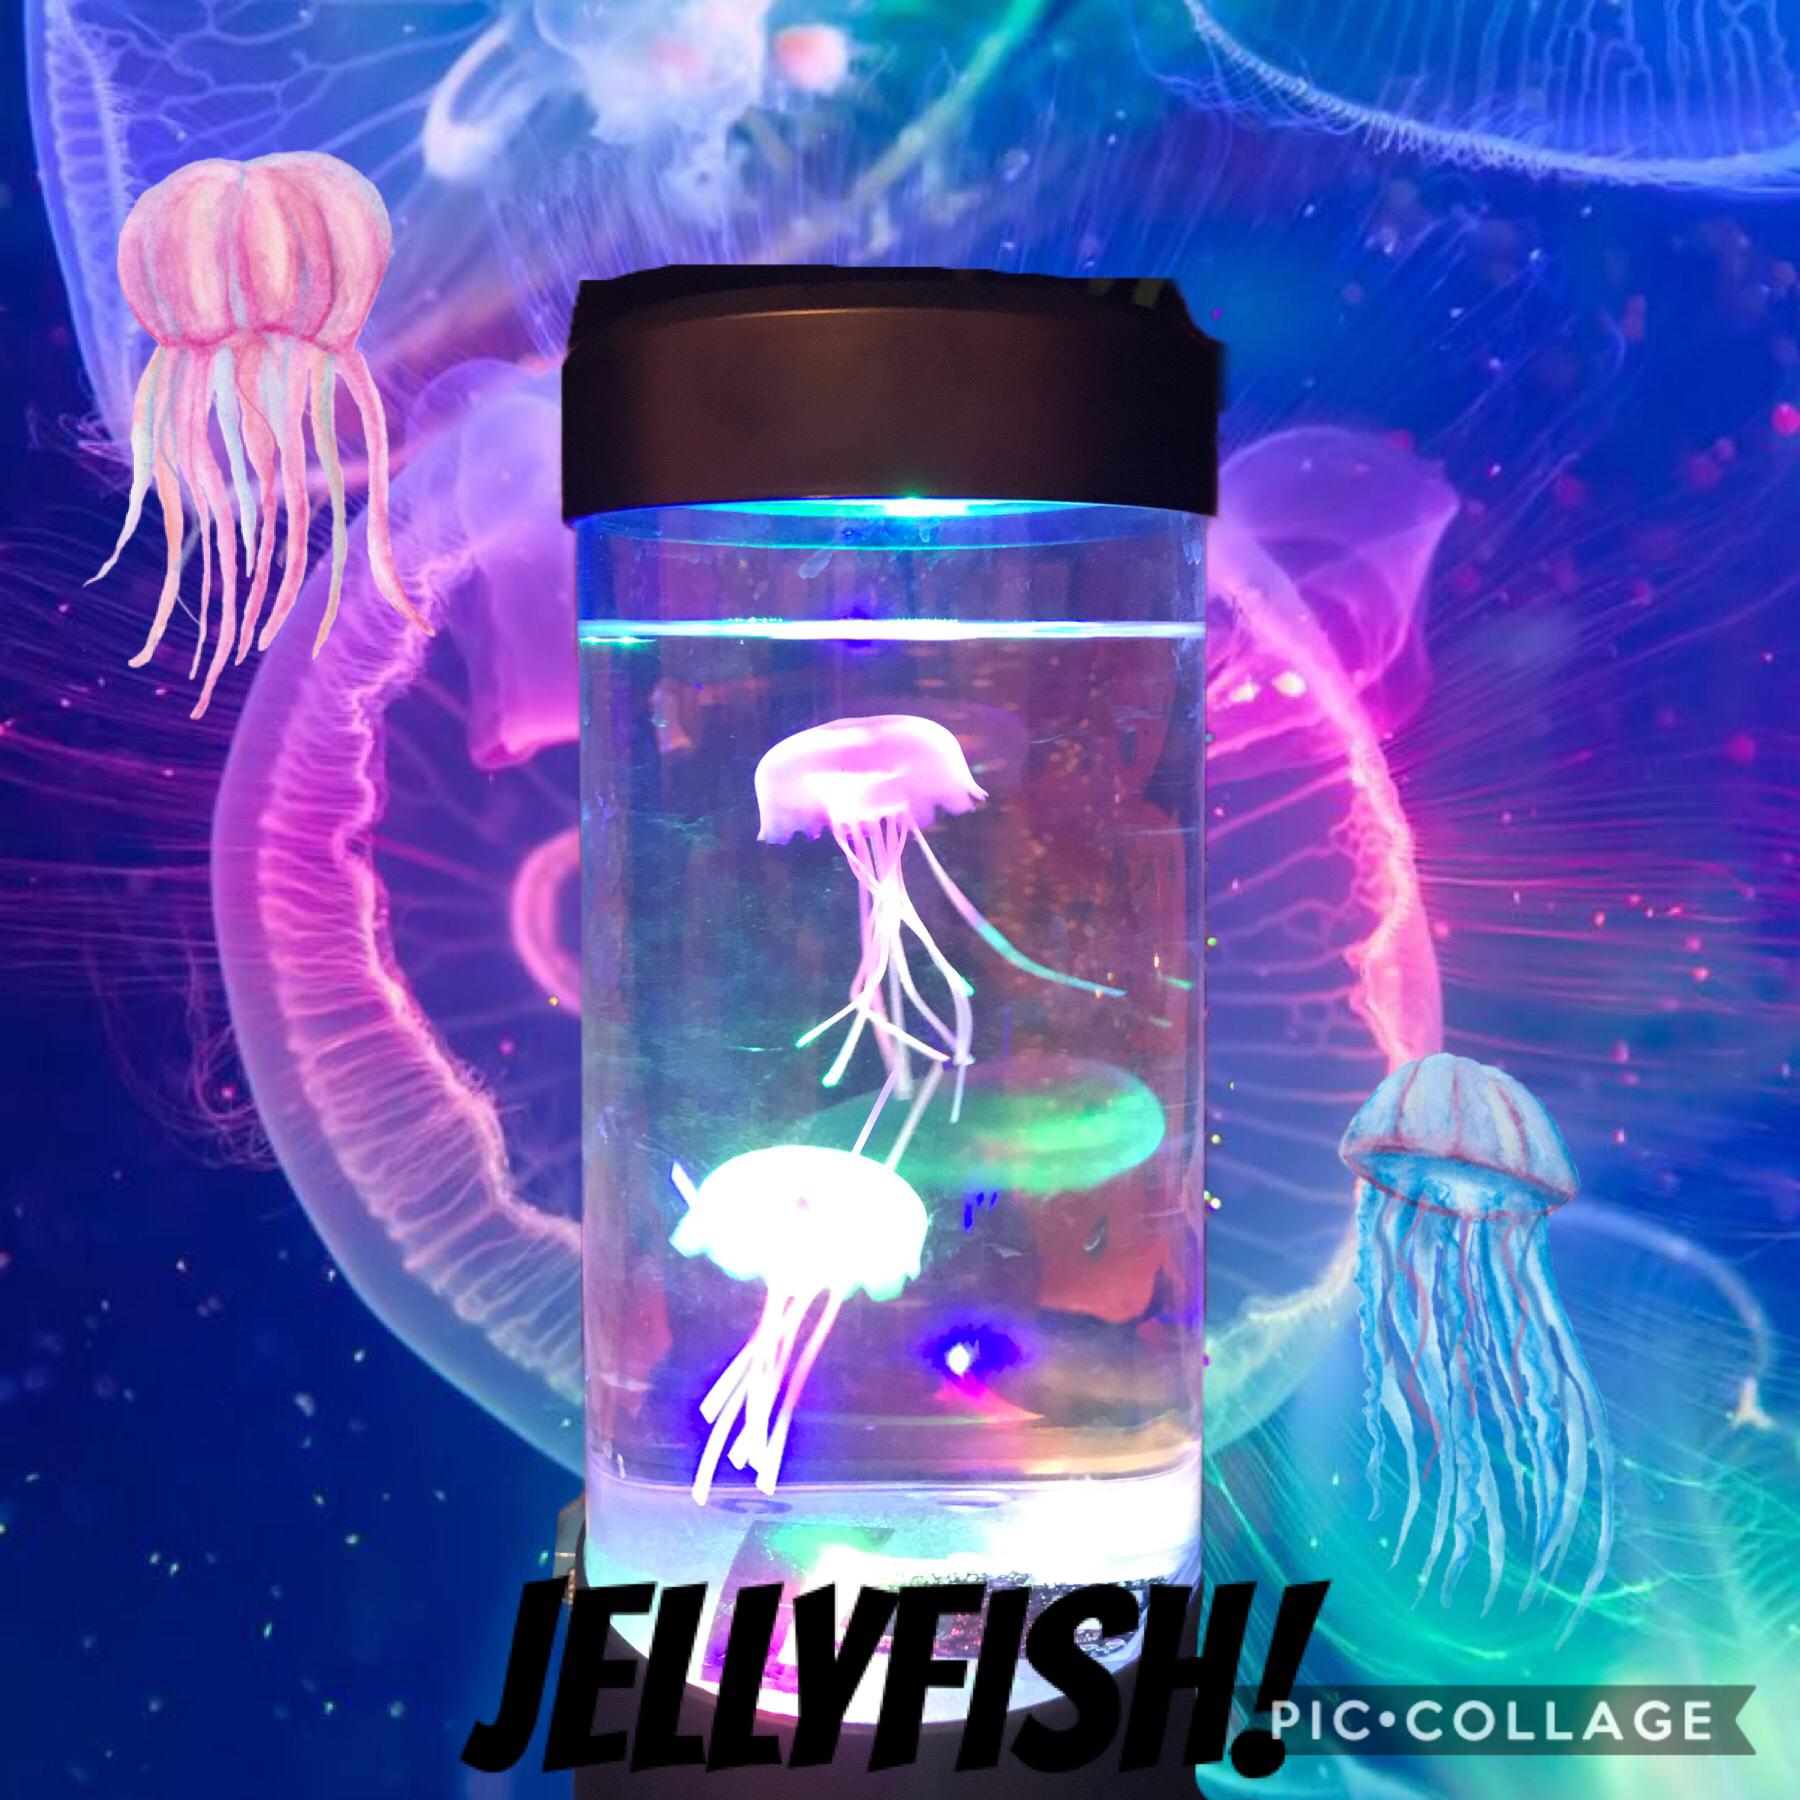 Aren’t jellyfish so beautiful?